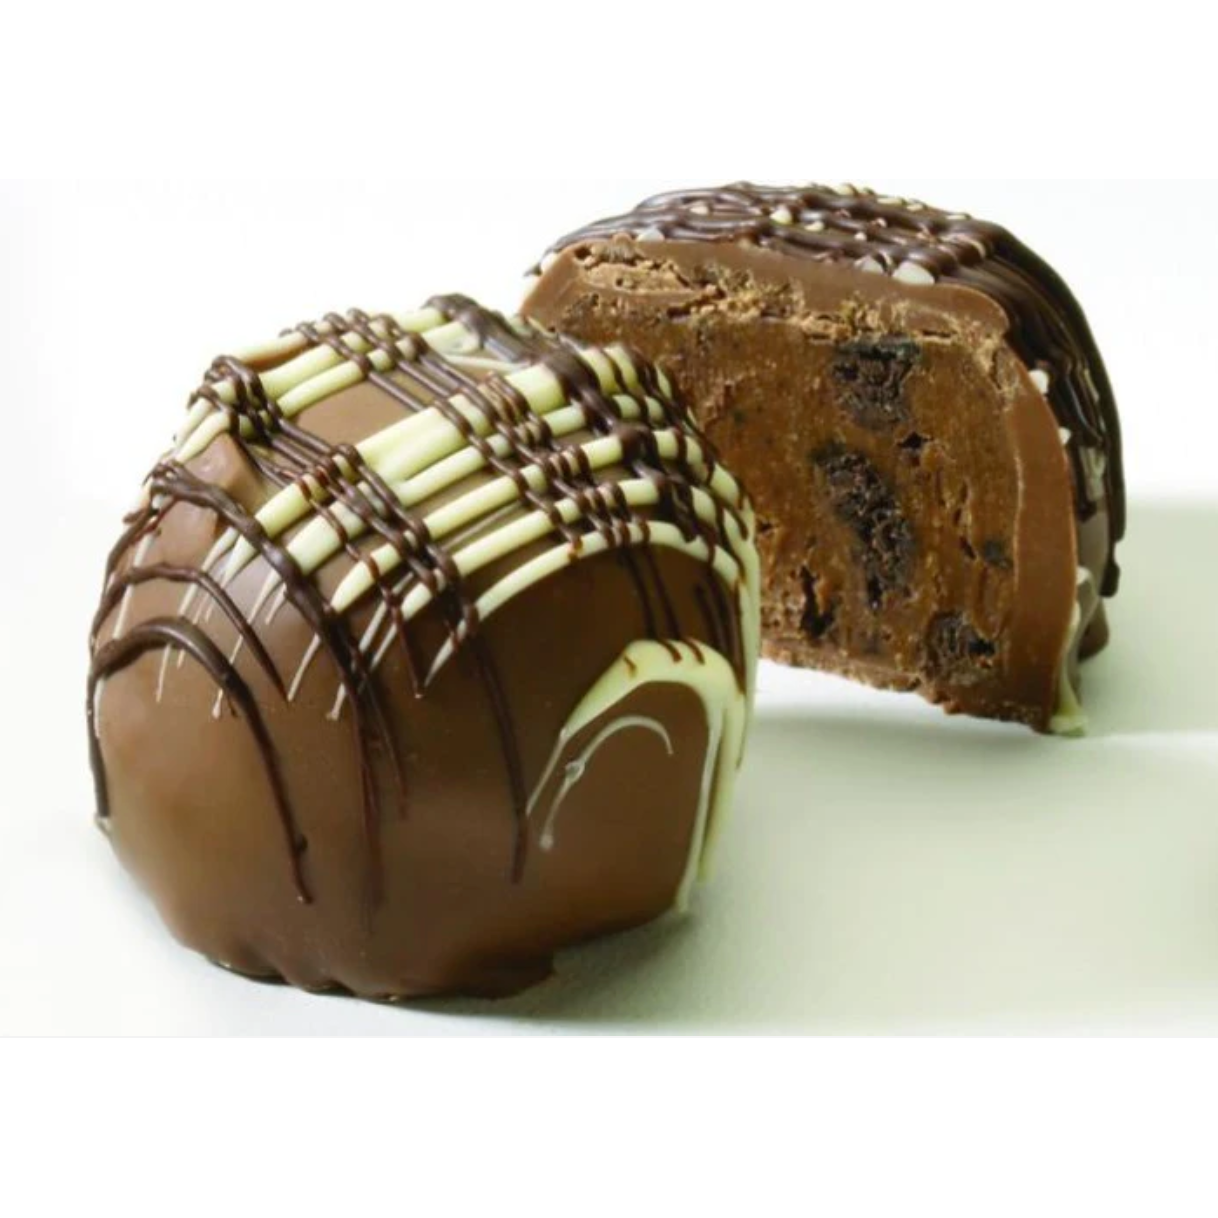 Chocolate Cookie Truffle